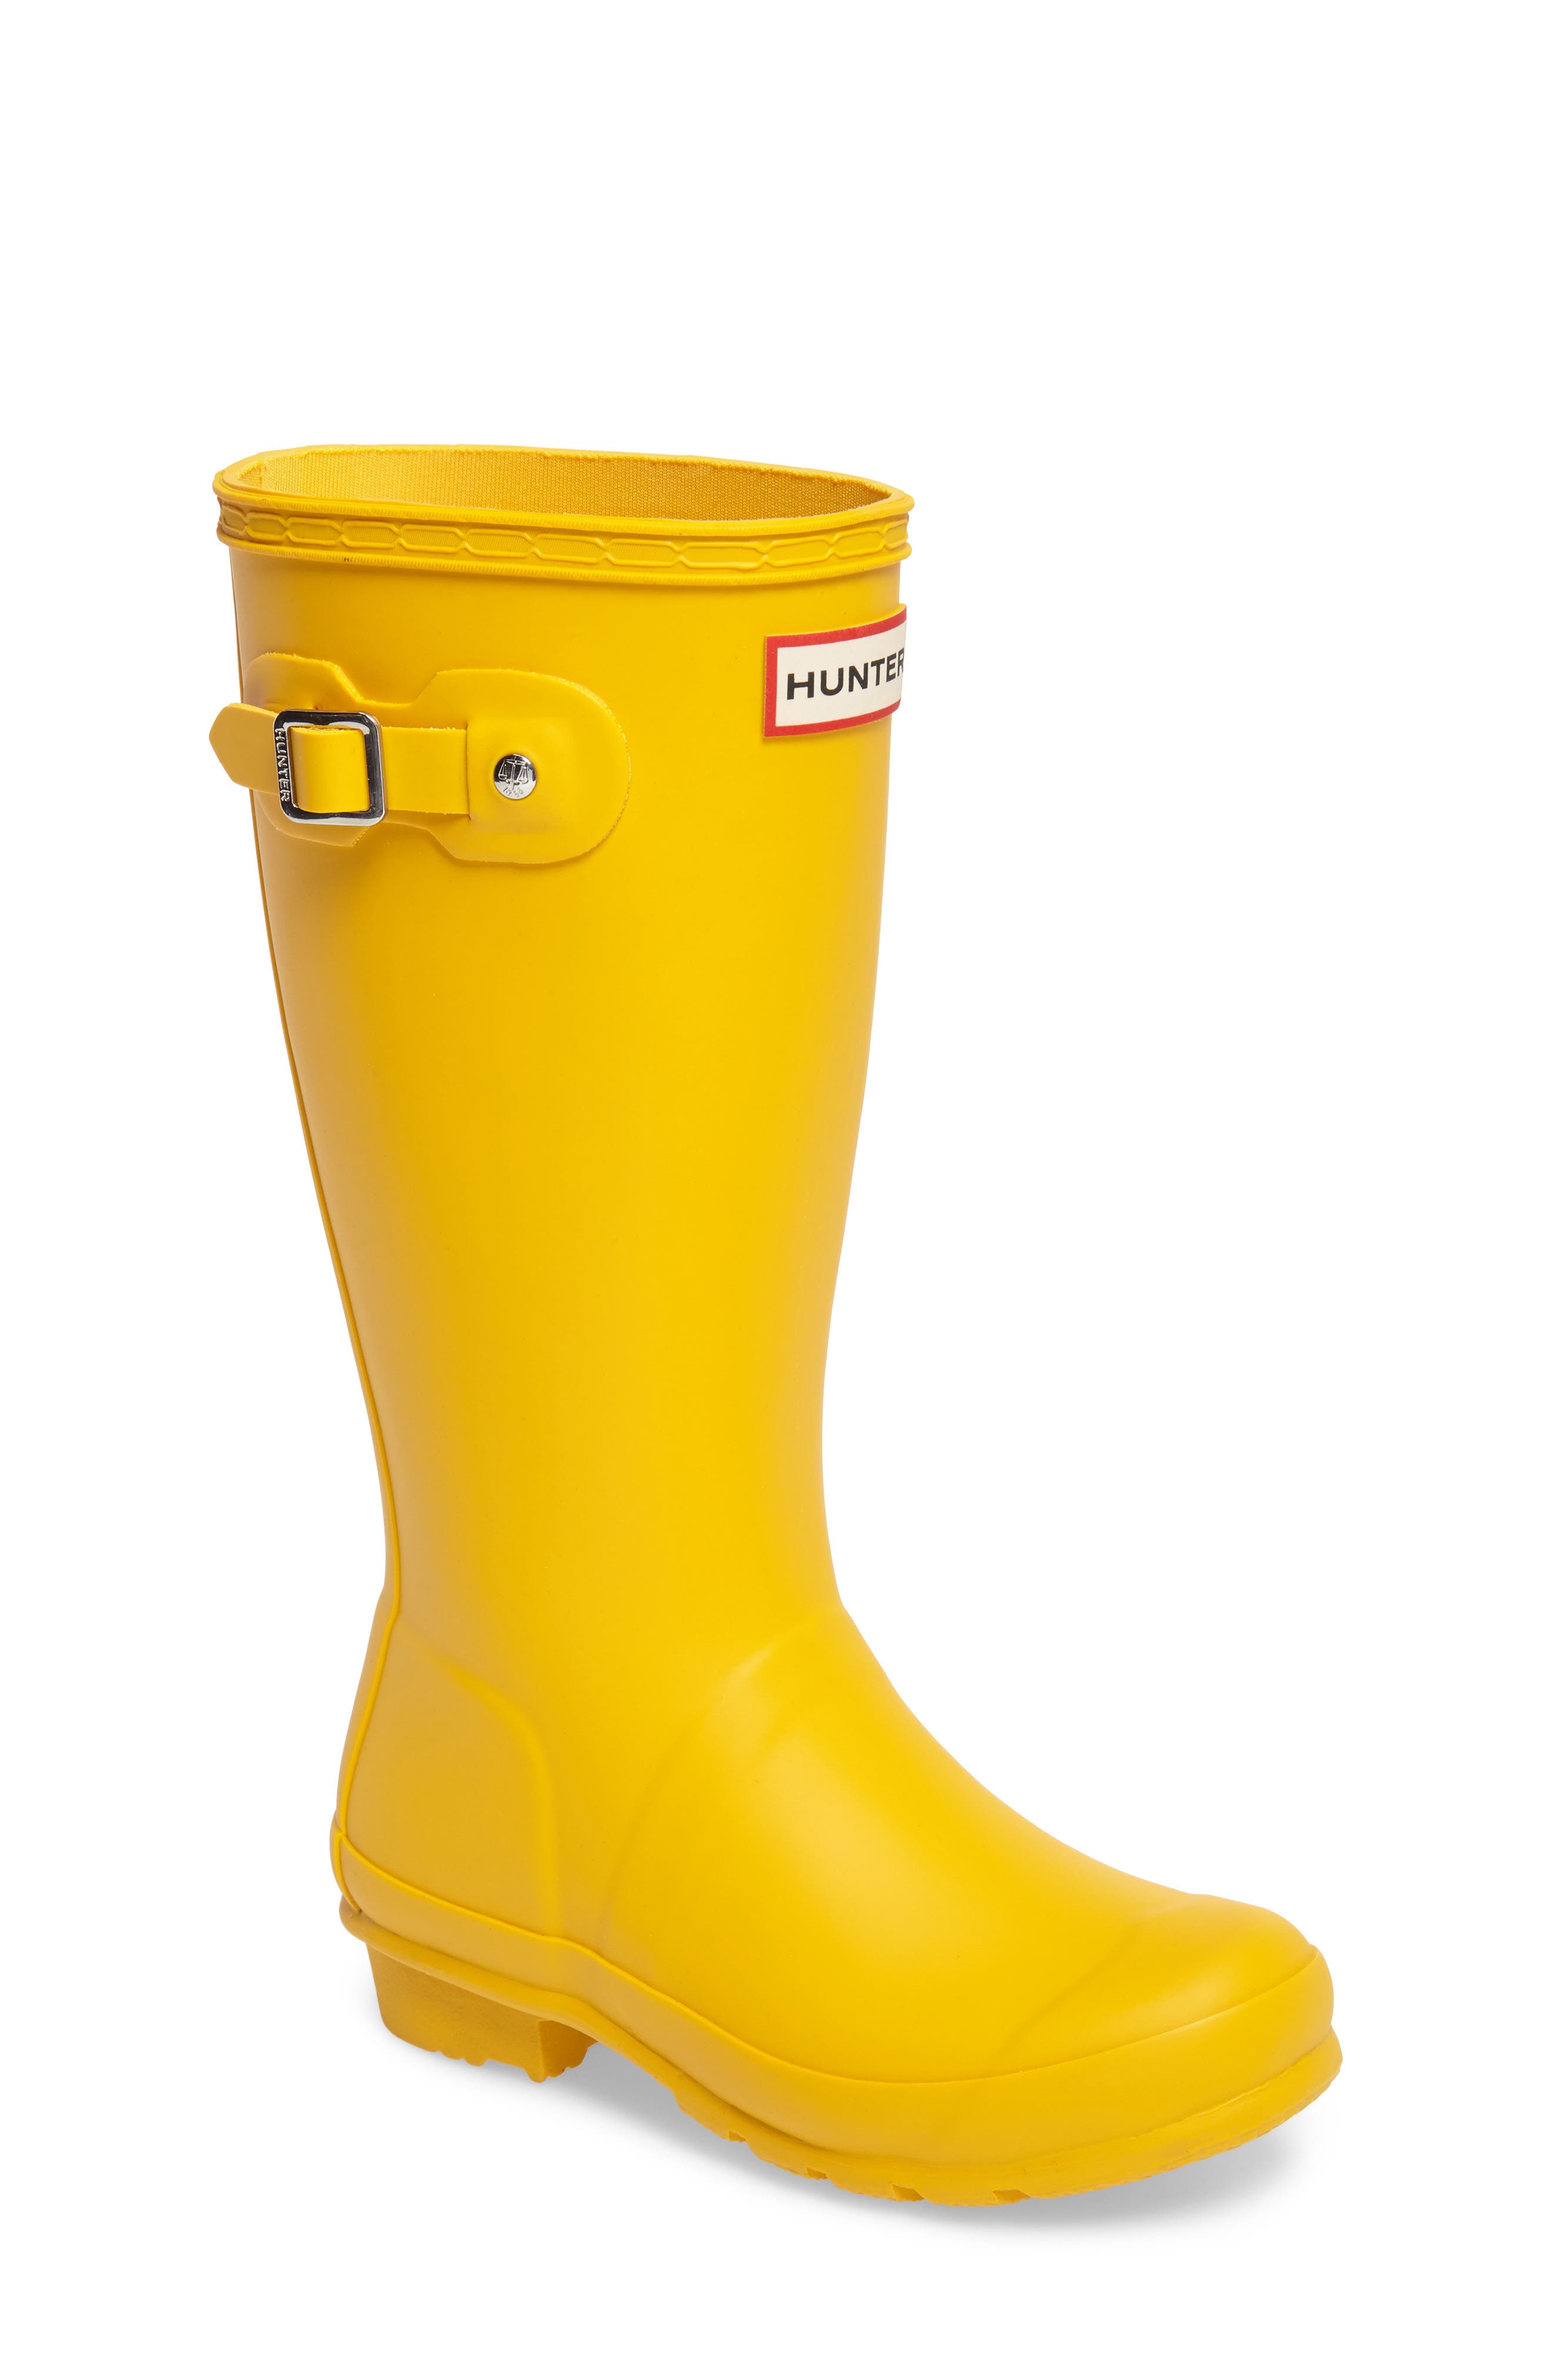 popular rain boot brands